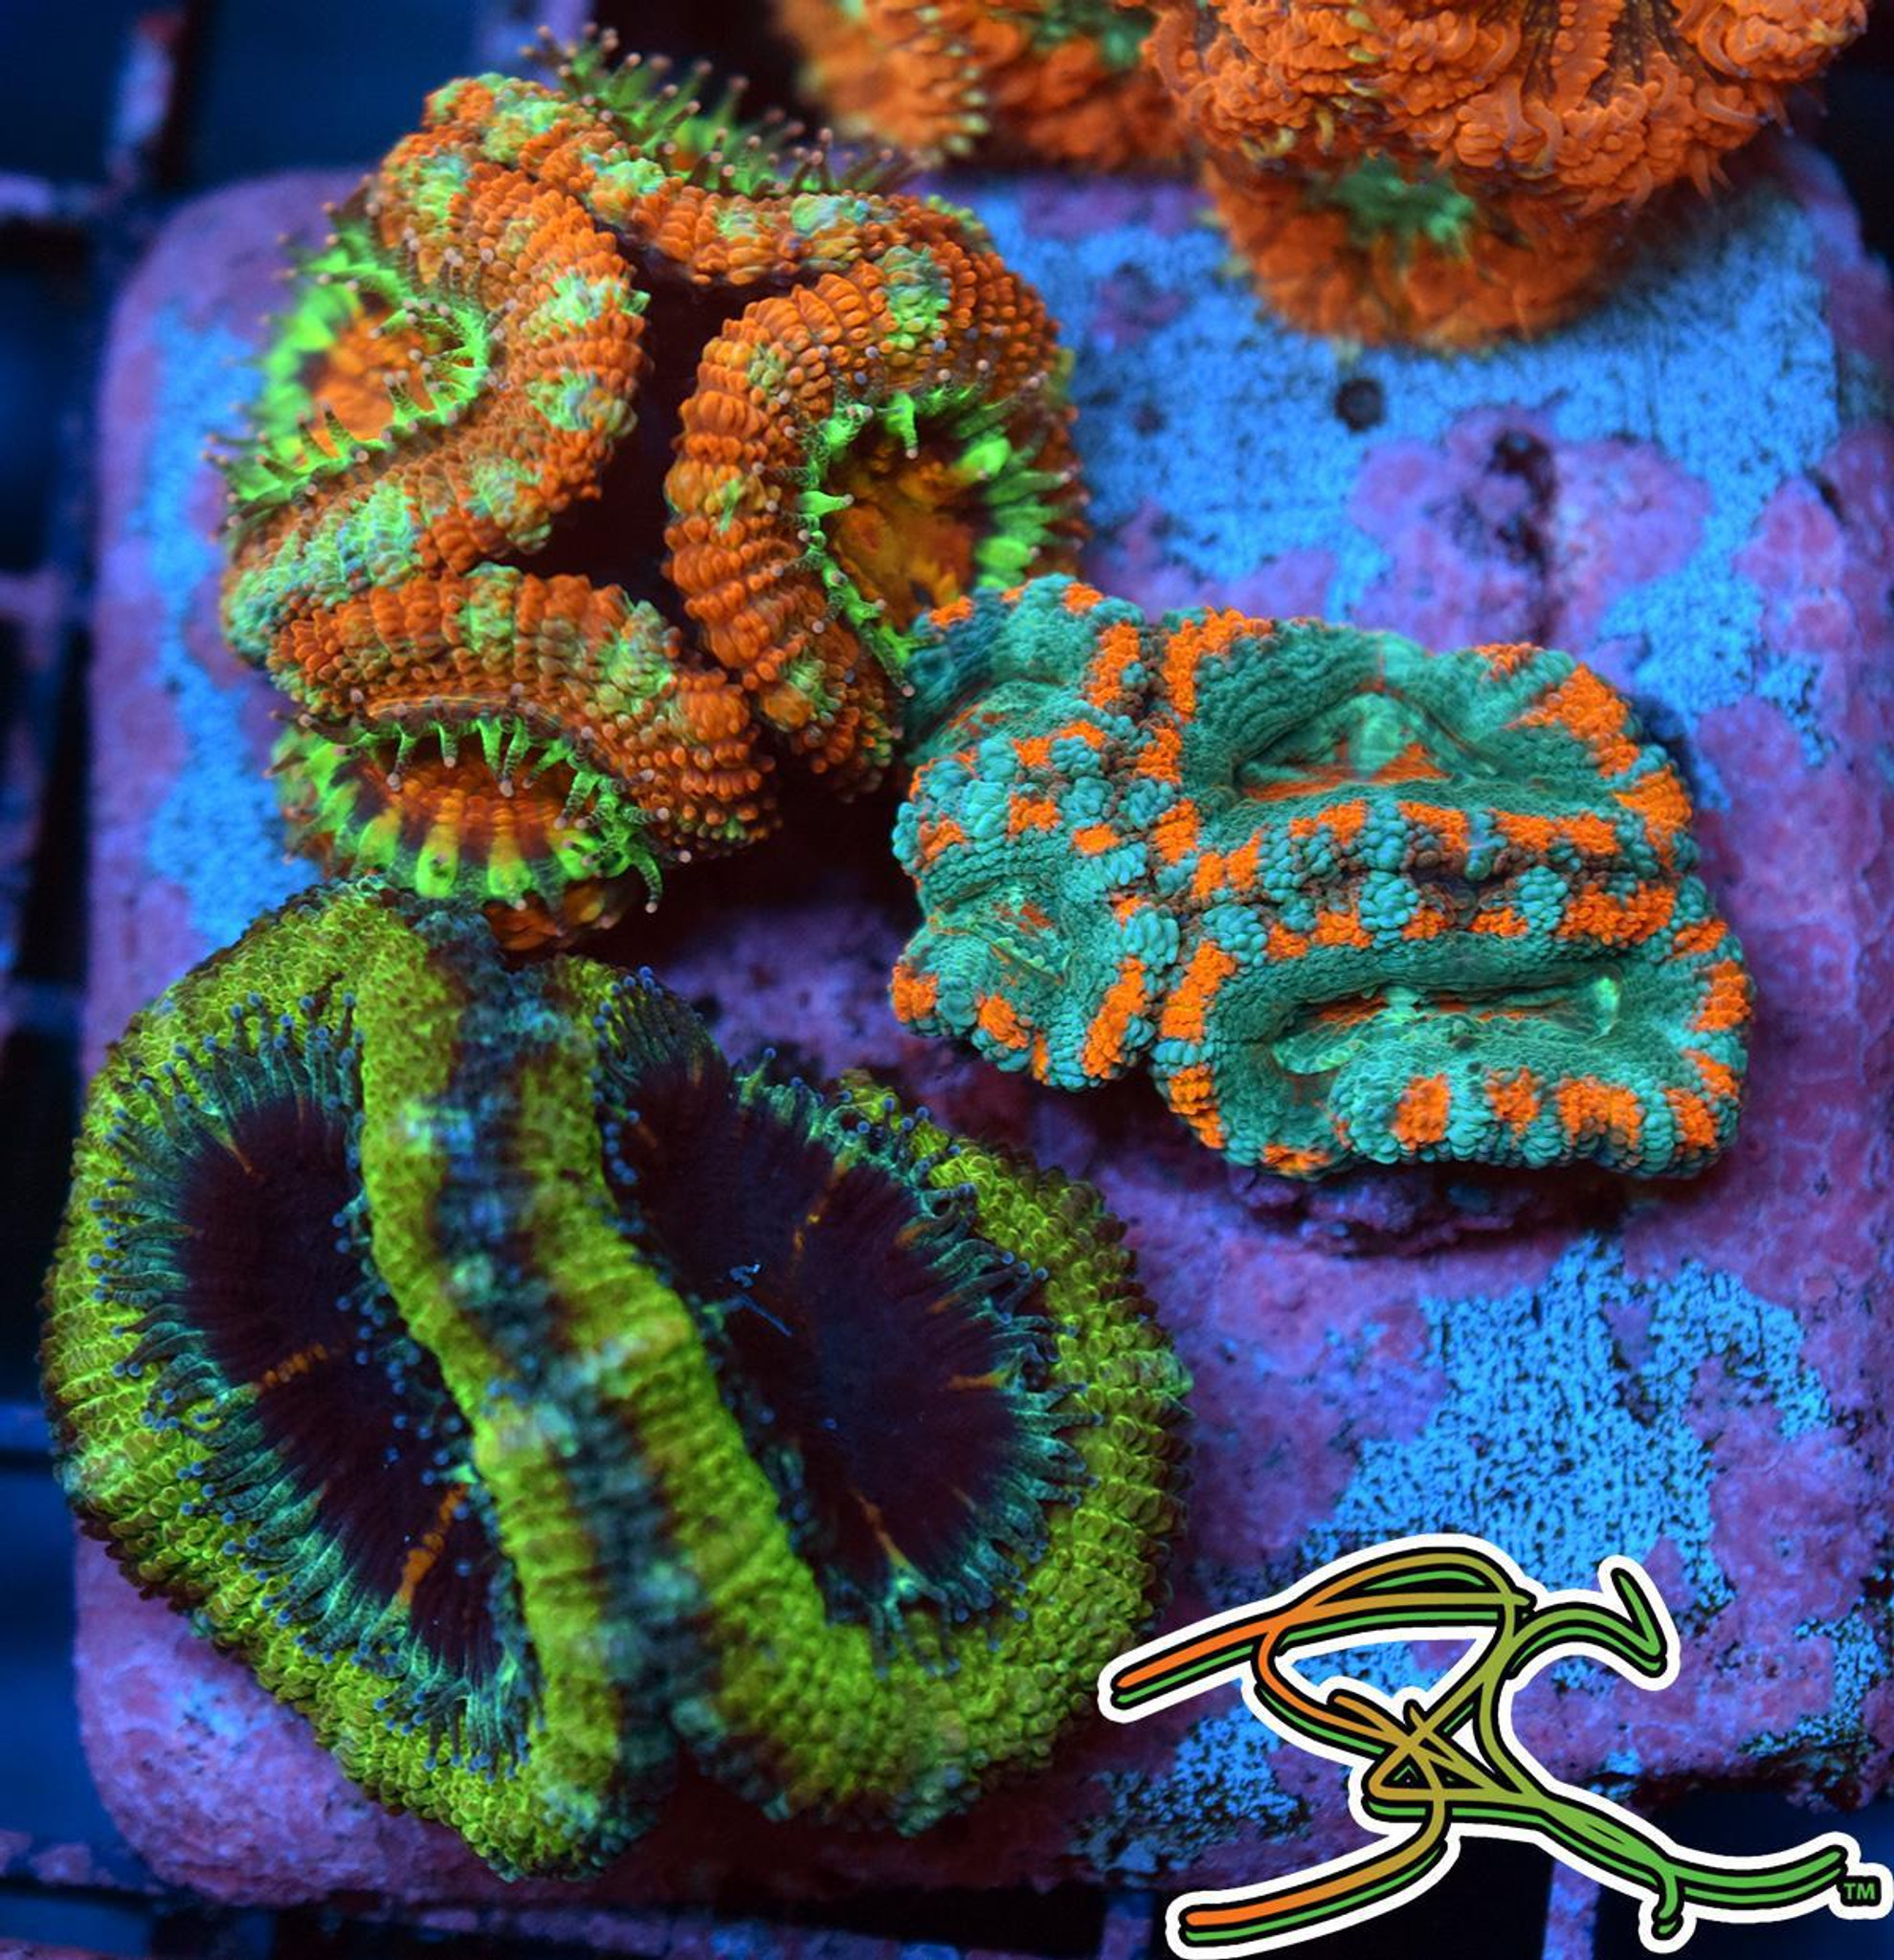 Ink Bird's ITC-306a - Jamrock Corals